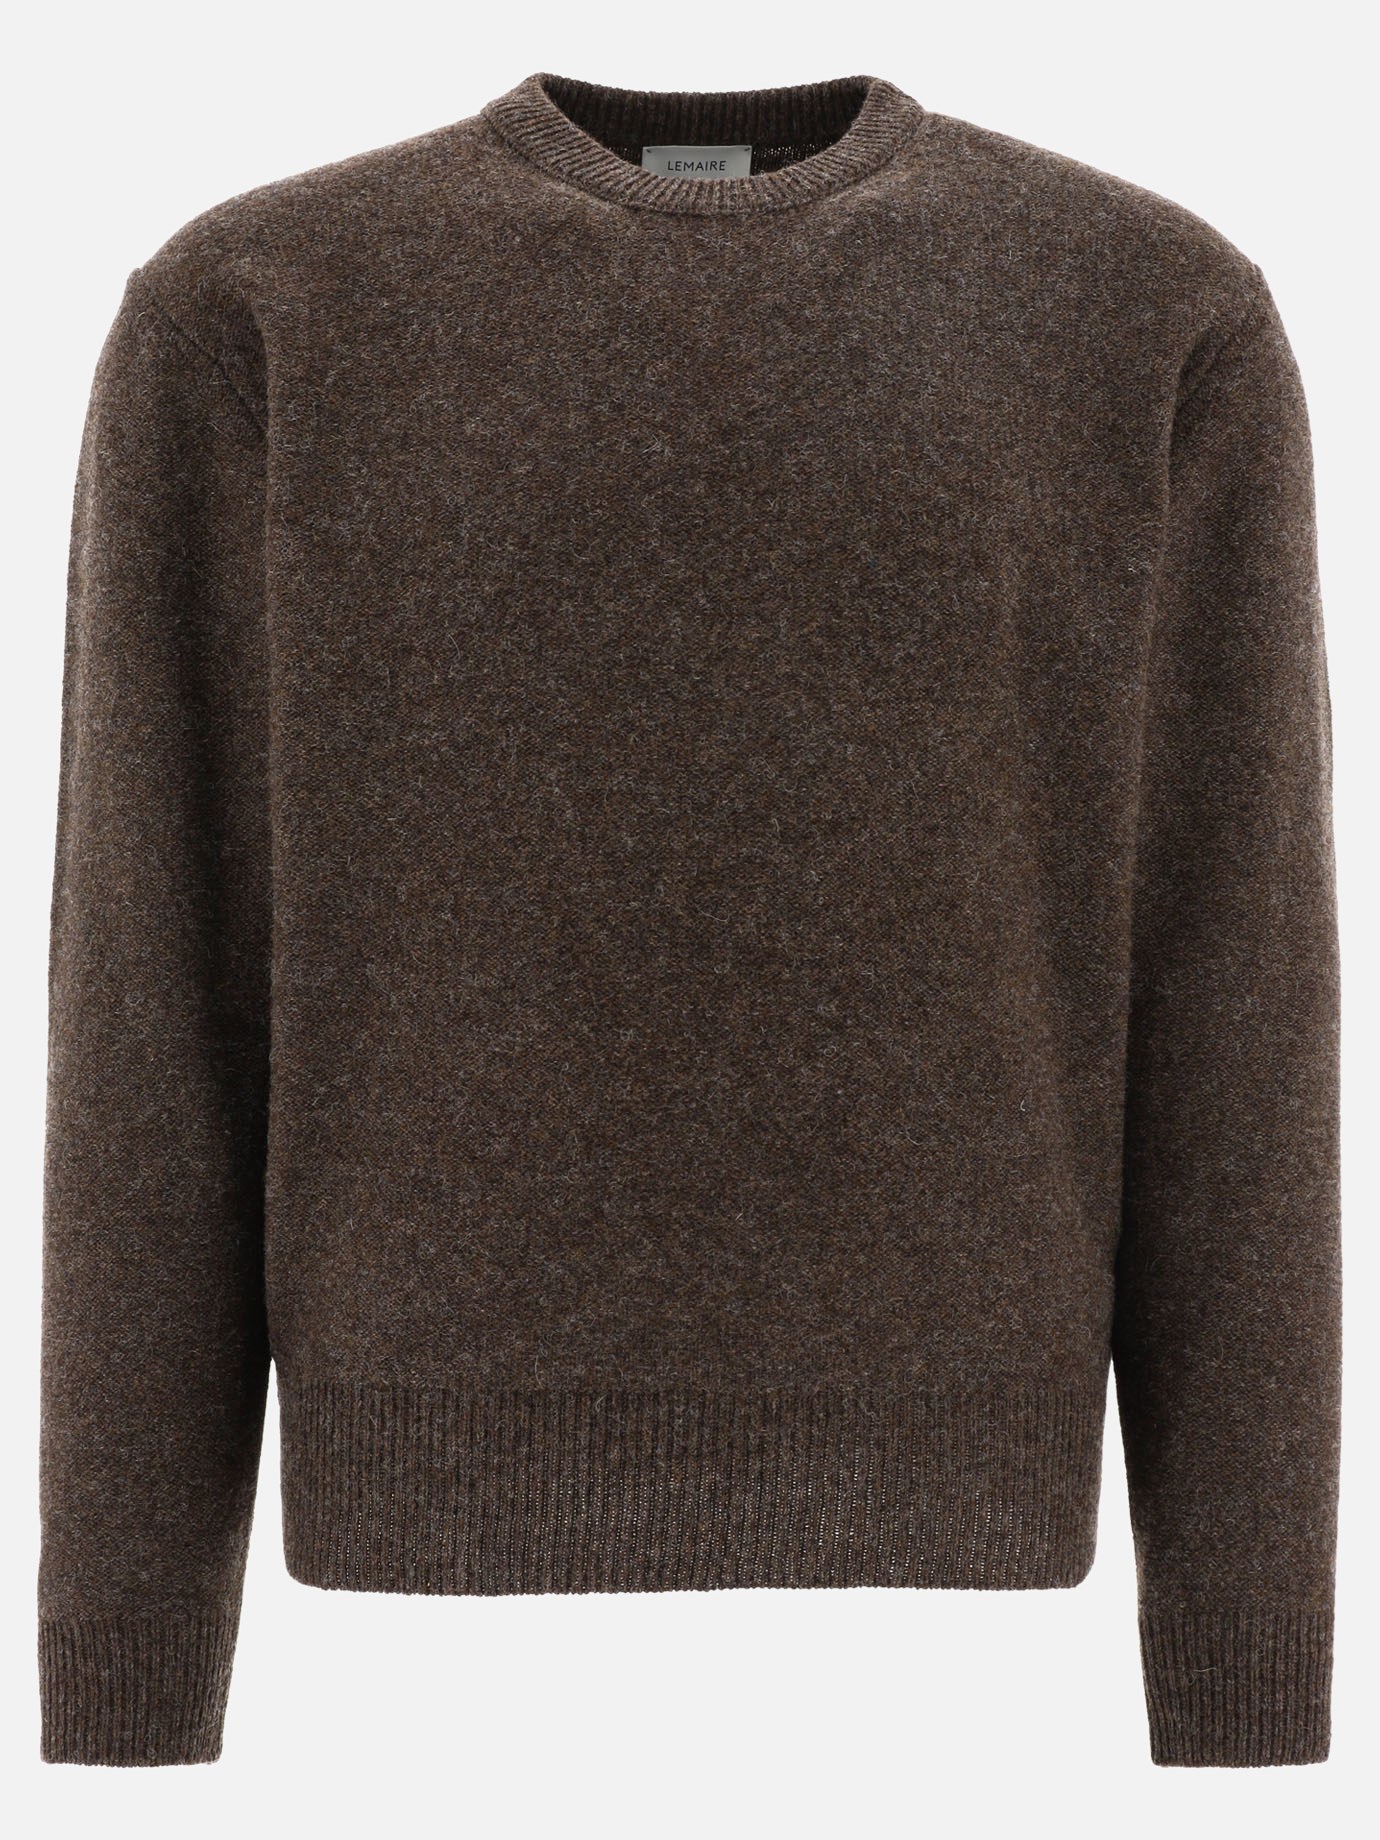 Brushed wool sweater